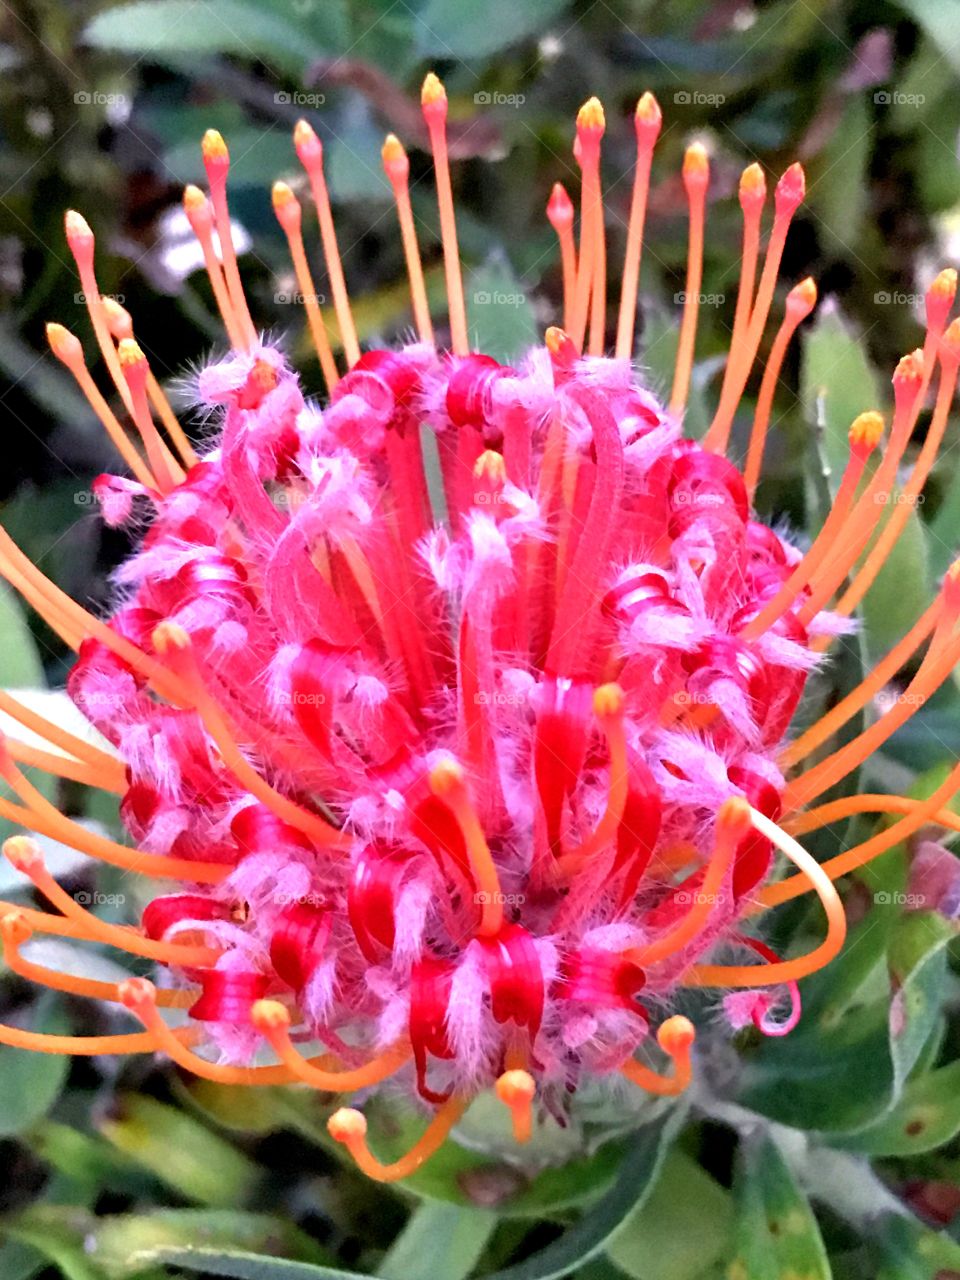 The Pincushion protea flower